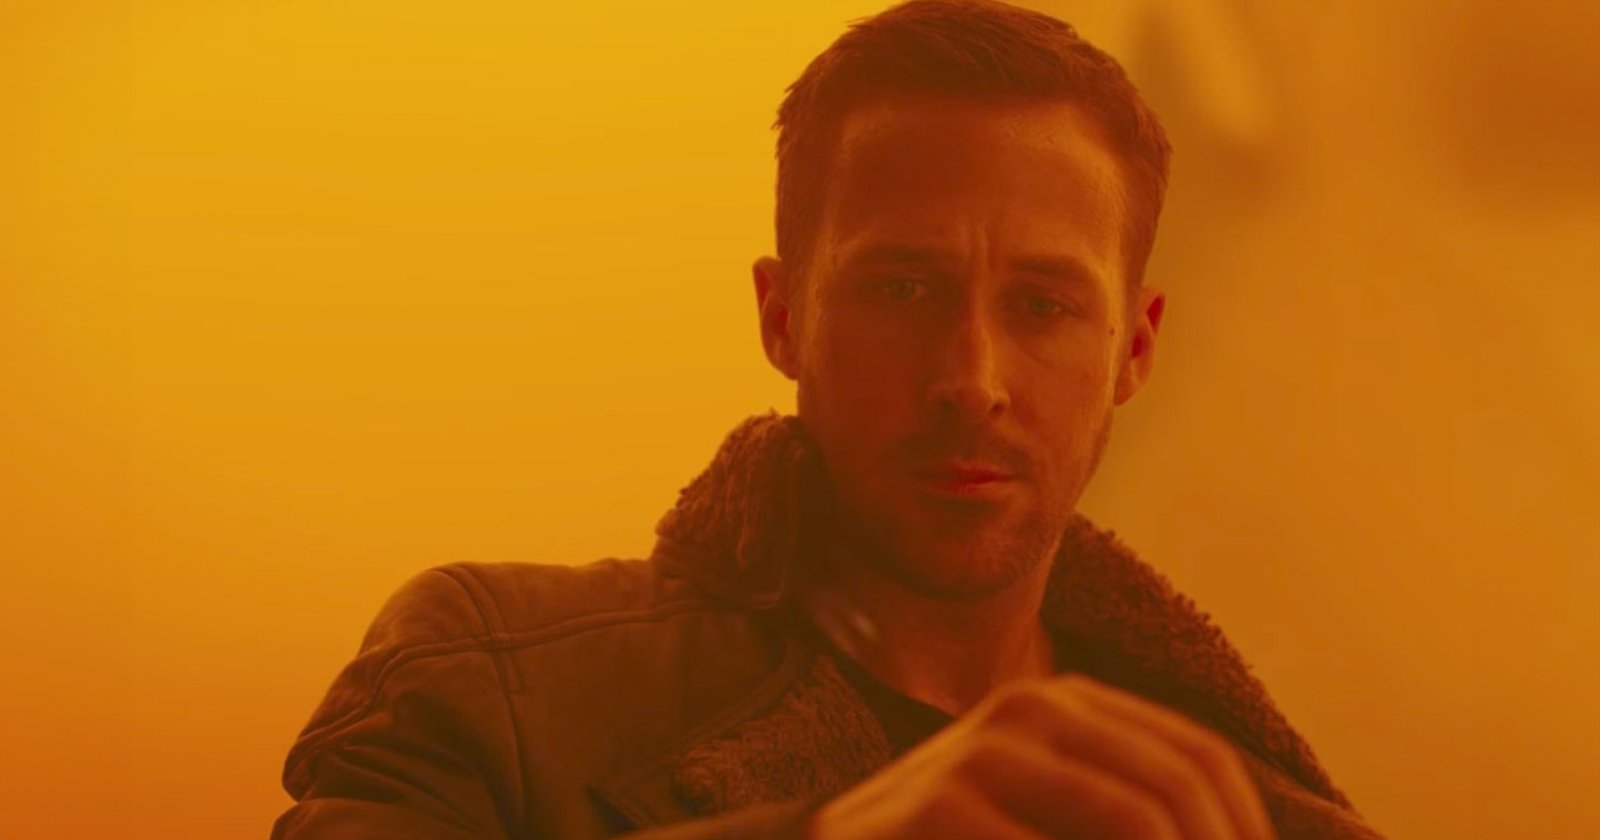 Ryan Gosling ถูกปฏิเสธรับบทนำหนัง ‘The Lovely Bones’ เพราะเตรียมตัวรับบทดีเกินไป